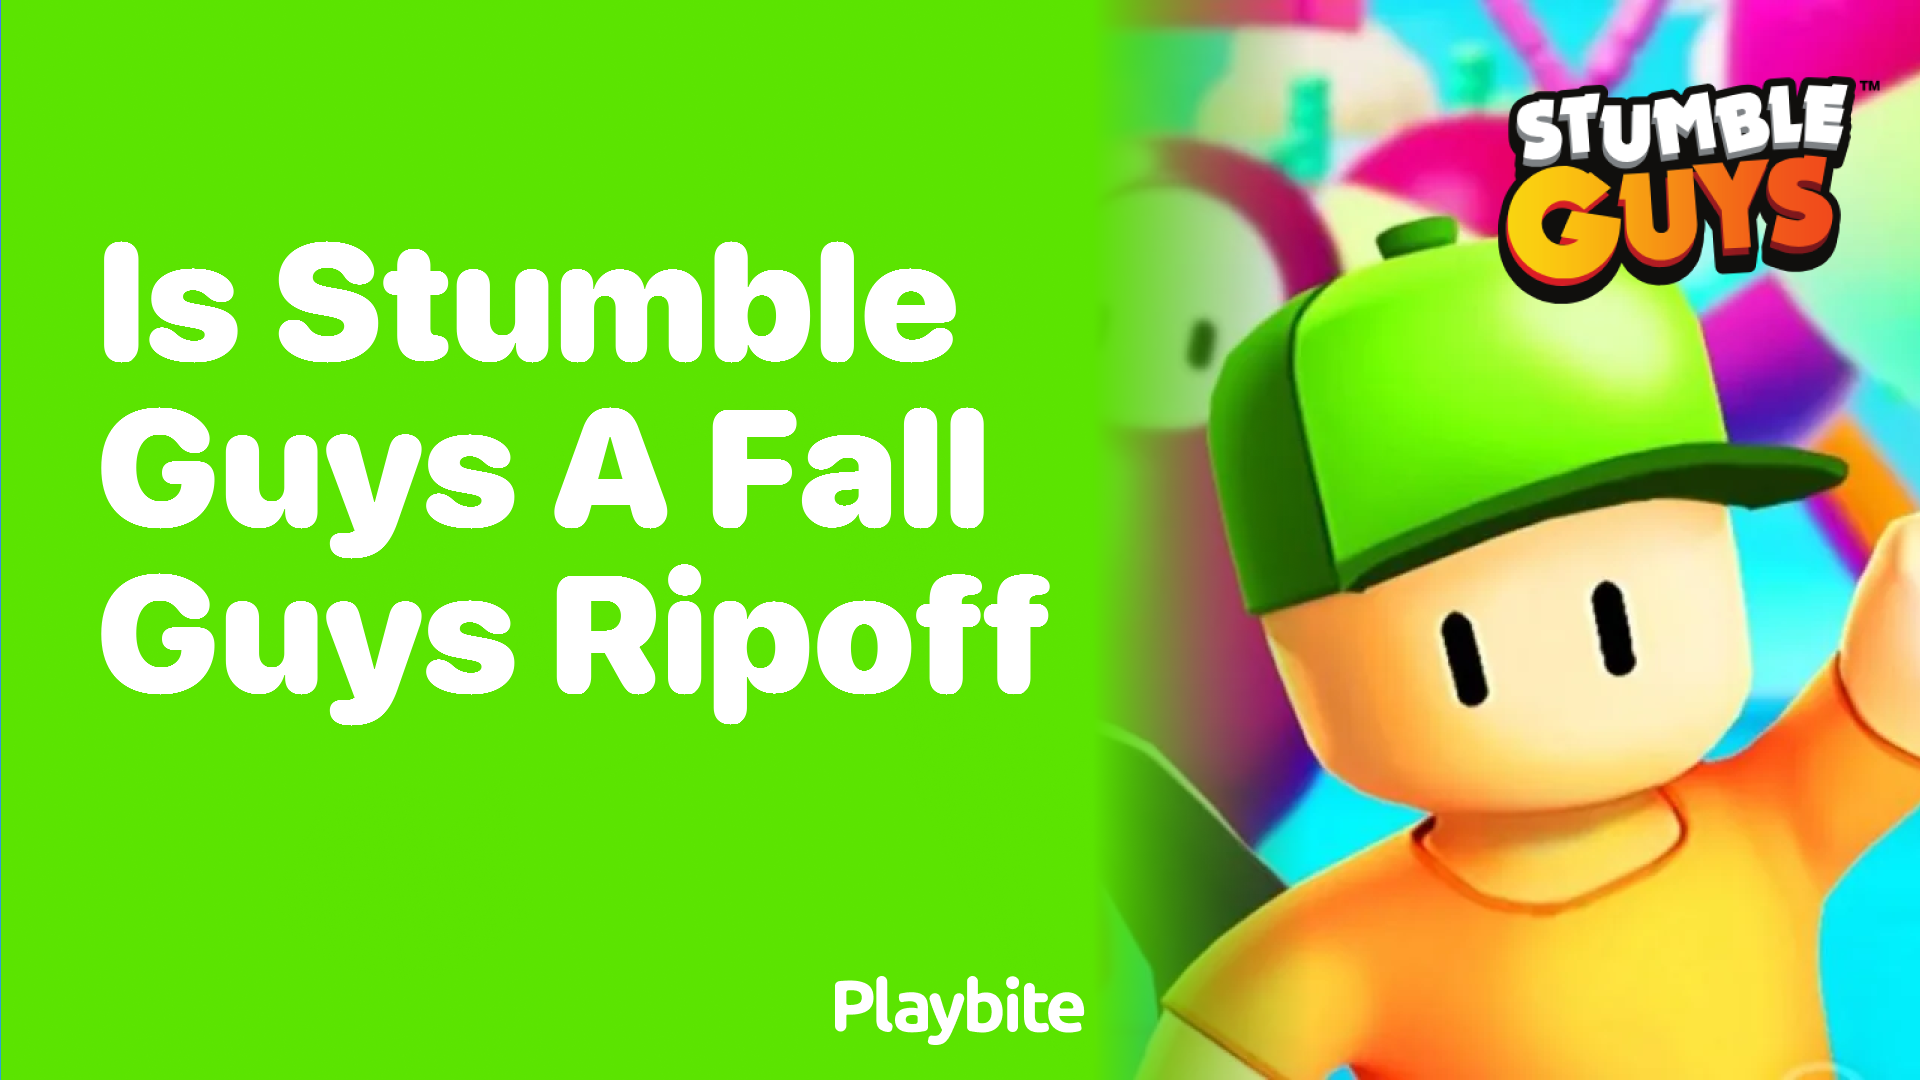 Is Stumble Guys a Ripoff of Fall Guys?